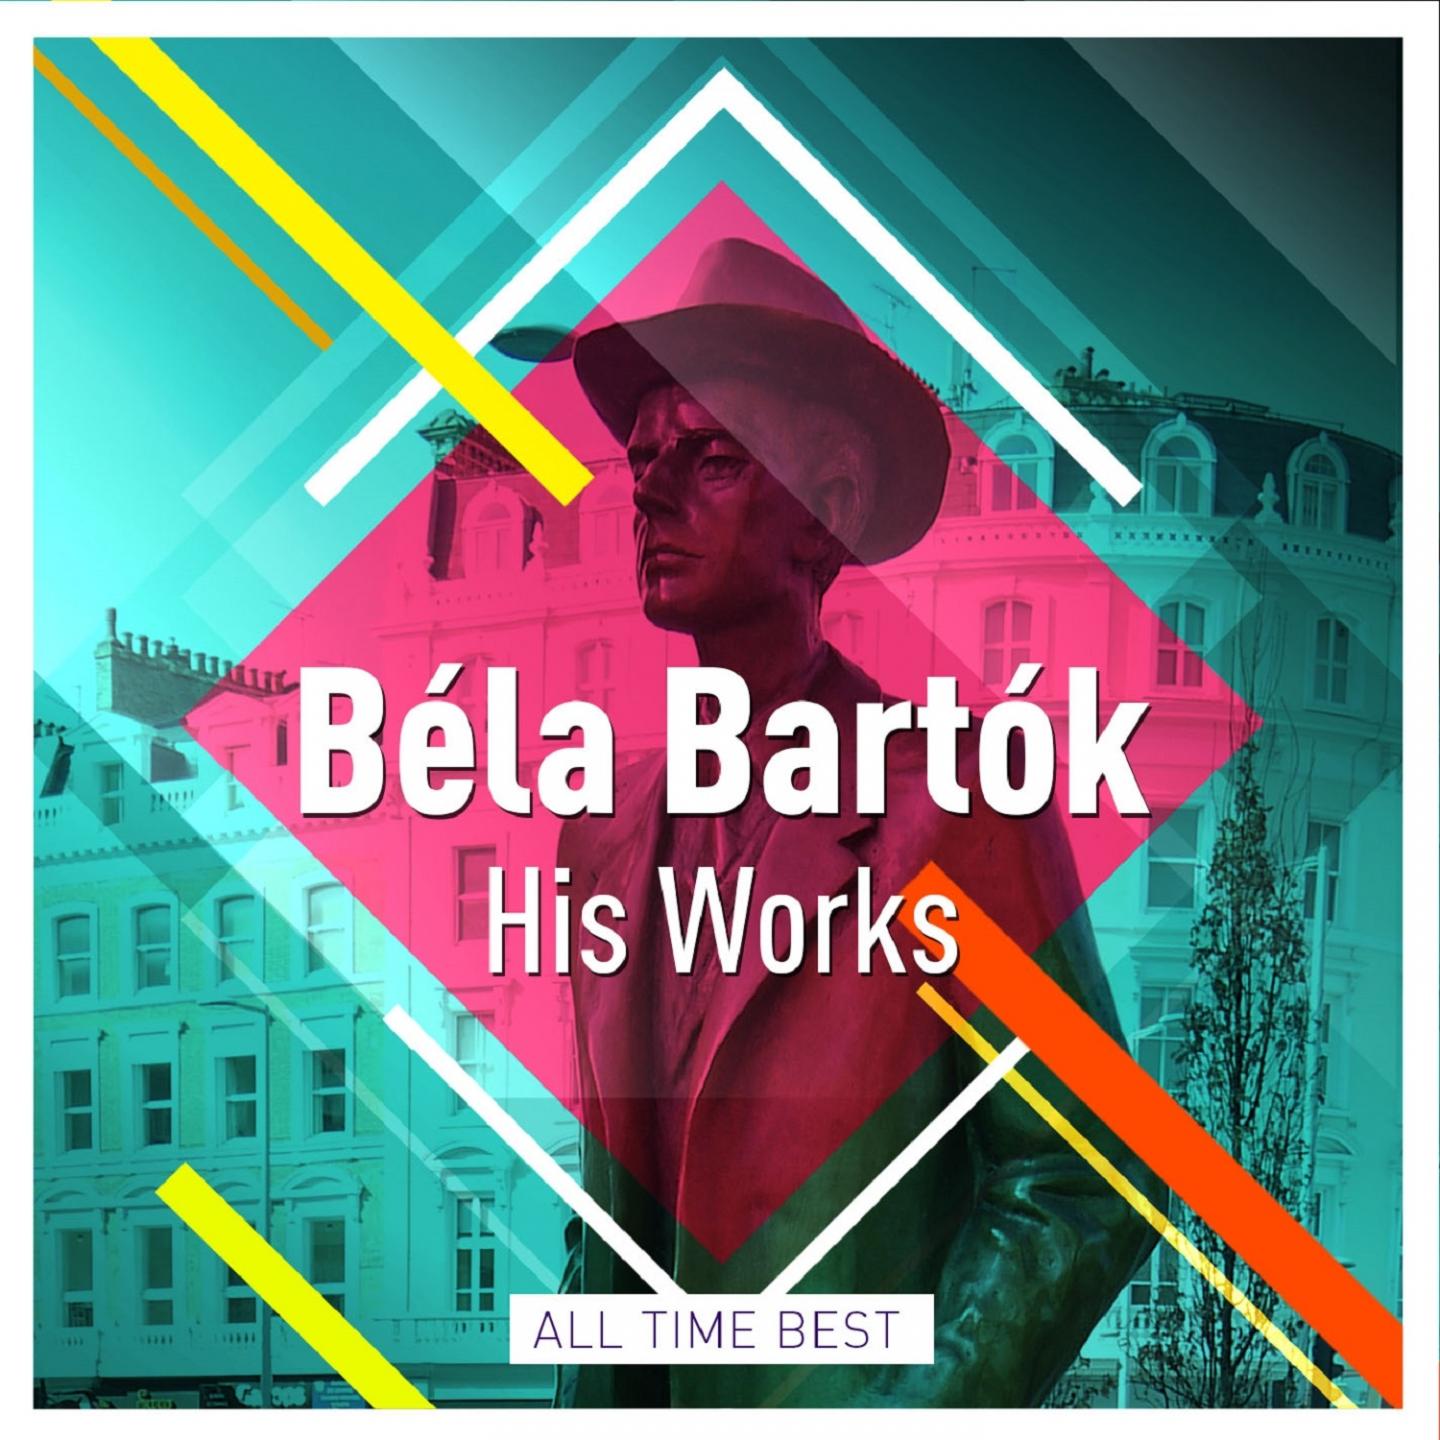 Be la Barto k  His Works